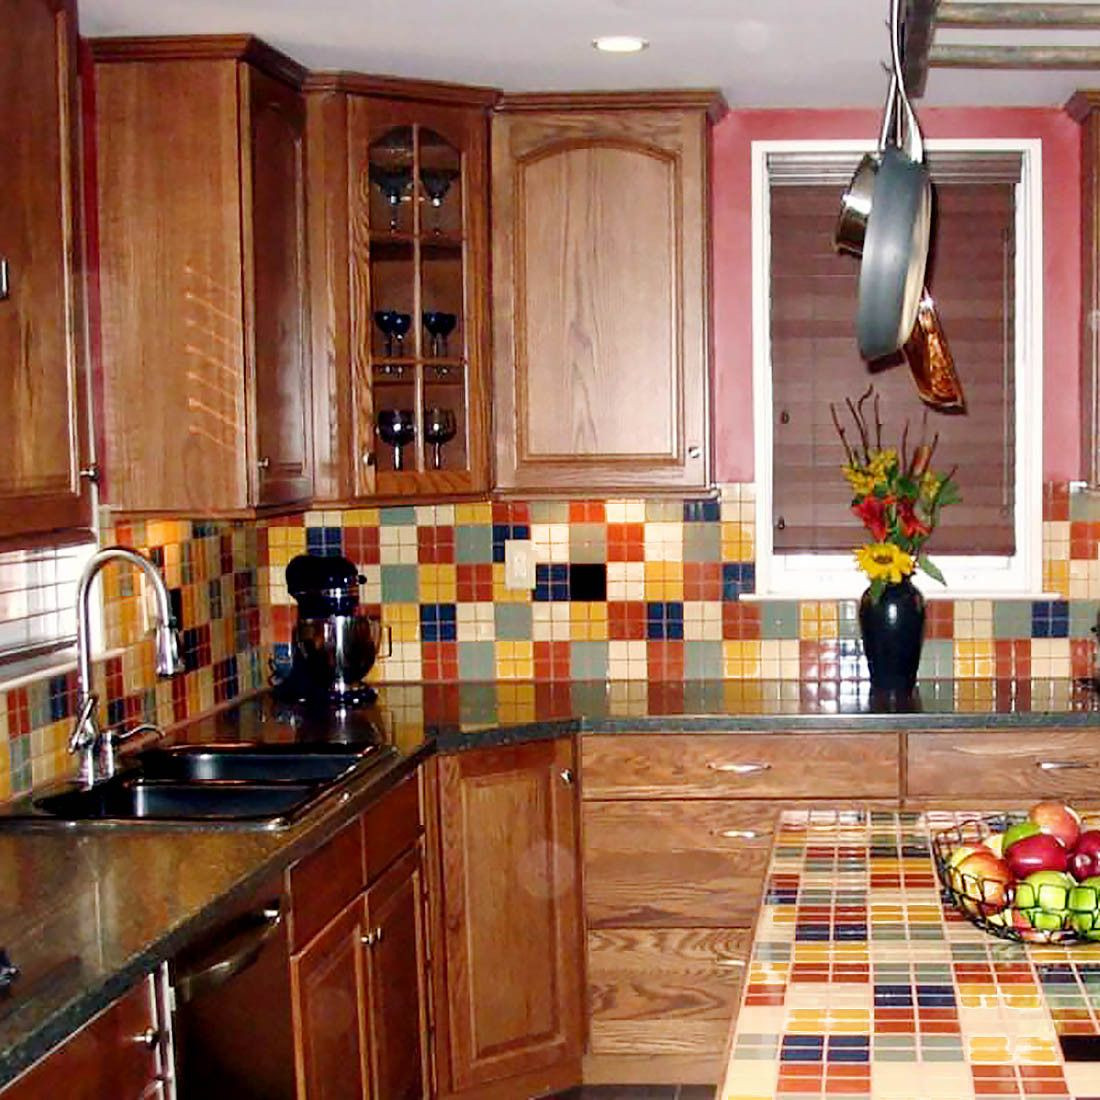 Kitchen Backsplash Tiles For Sale
 Mexican Ceramic Tiles for Sale Home Sweet Home